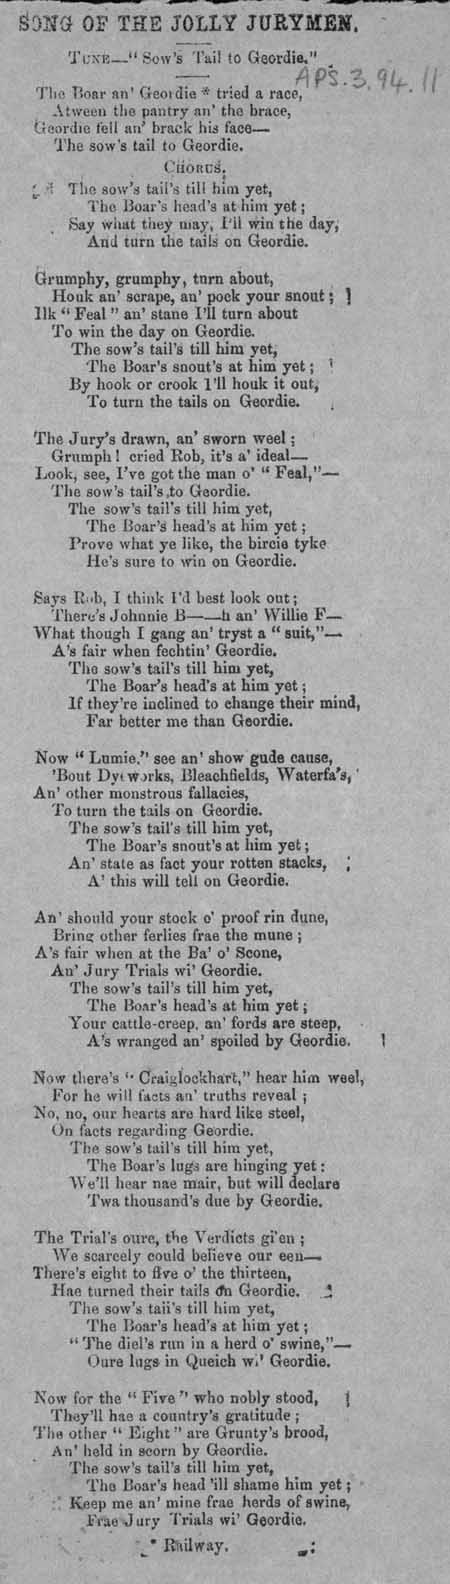 Broadside ballad entitled 'Song of the Jolly Jurymen'